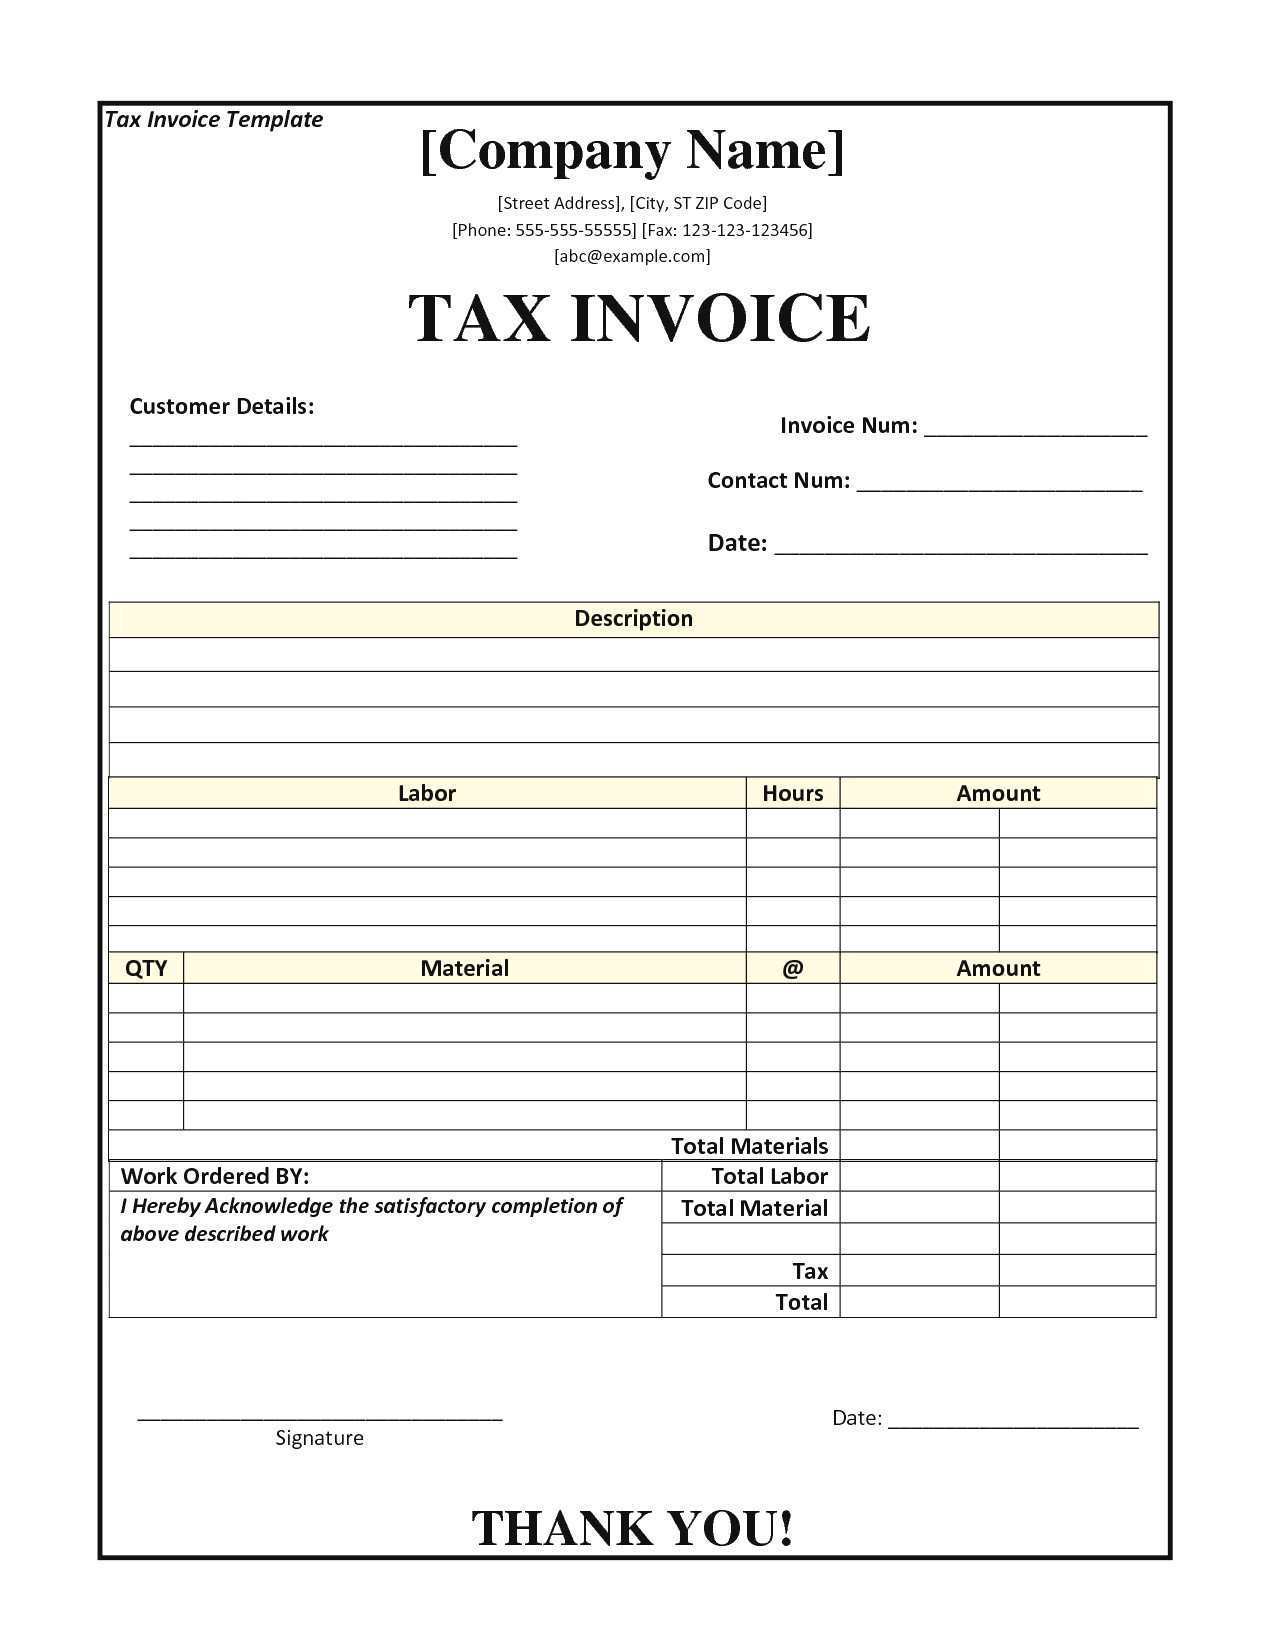 83 Adding Tax Invoice Template Australia Word Download by Tax Invoice Template Australia Word